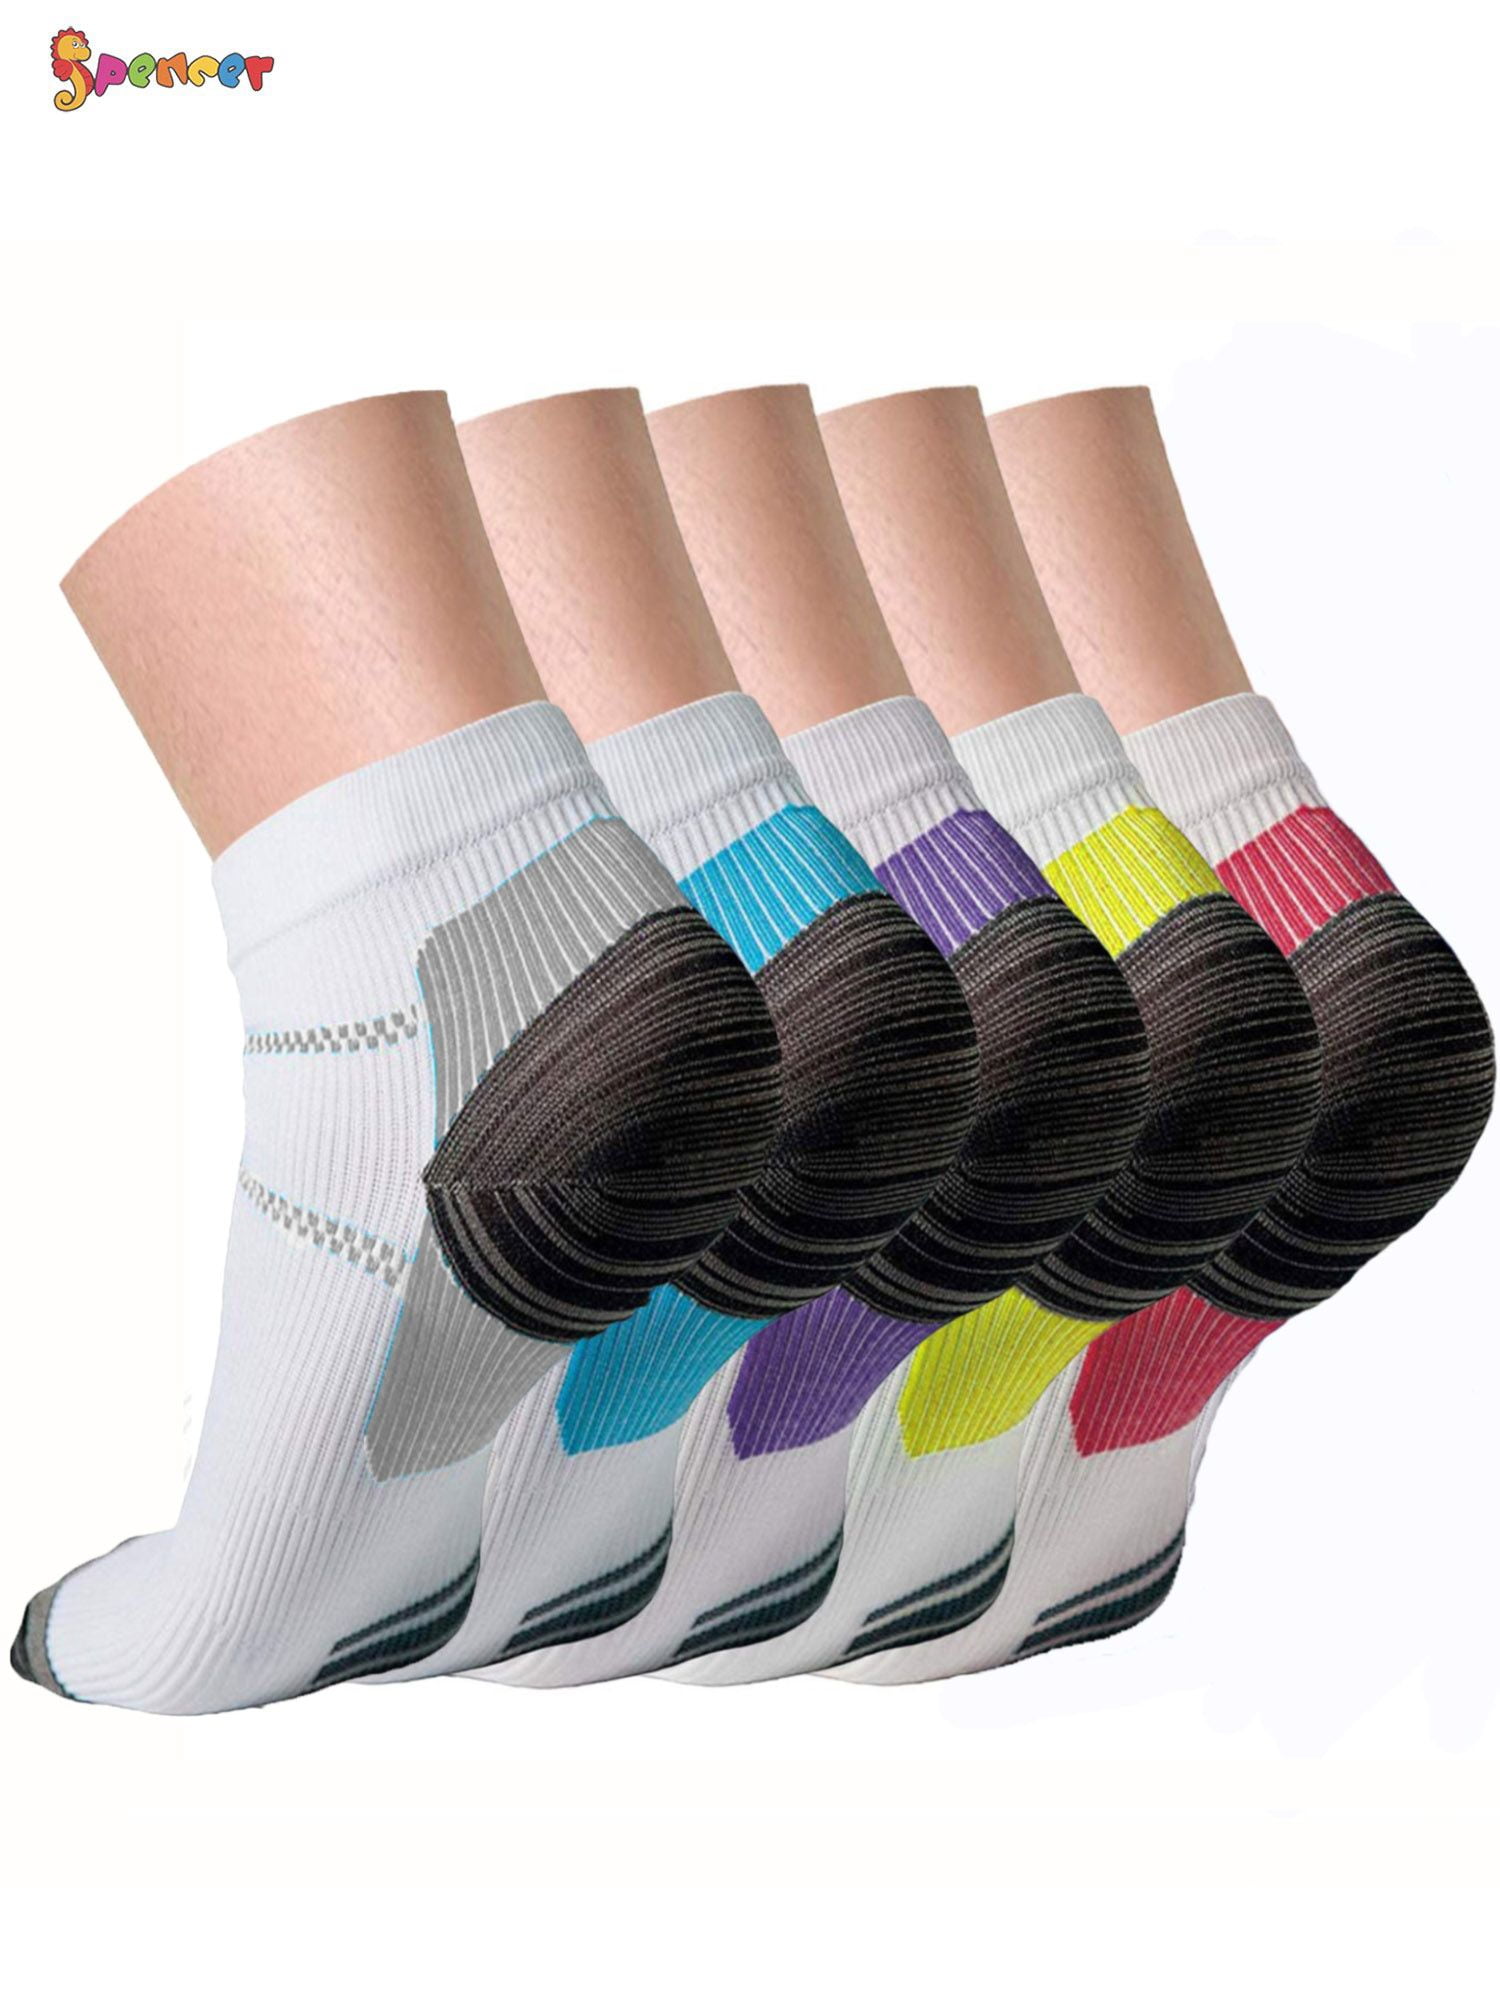 Basketball Socks Pro Mens Womens Running Jogging Compression Sports Ankle Socks 